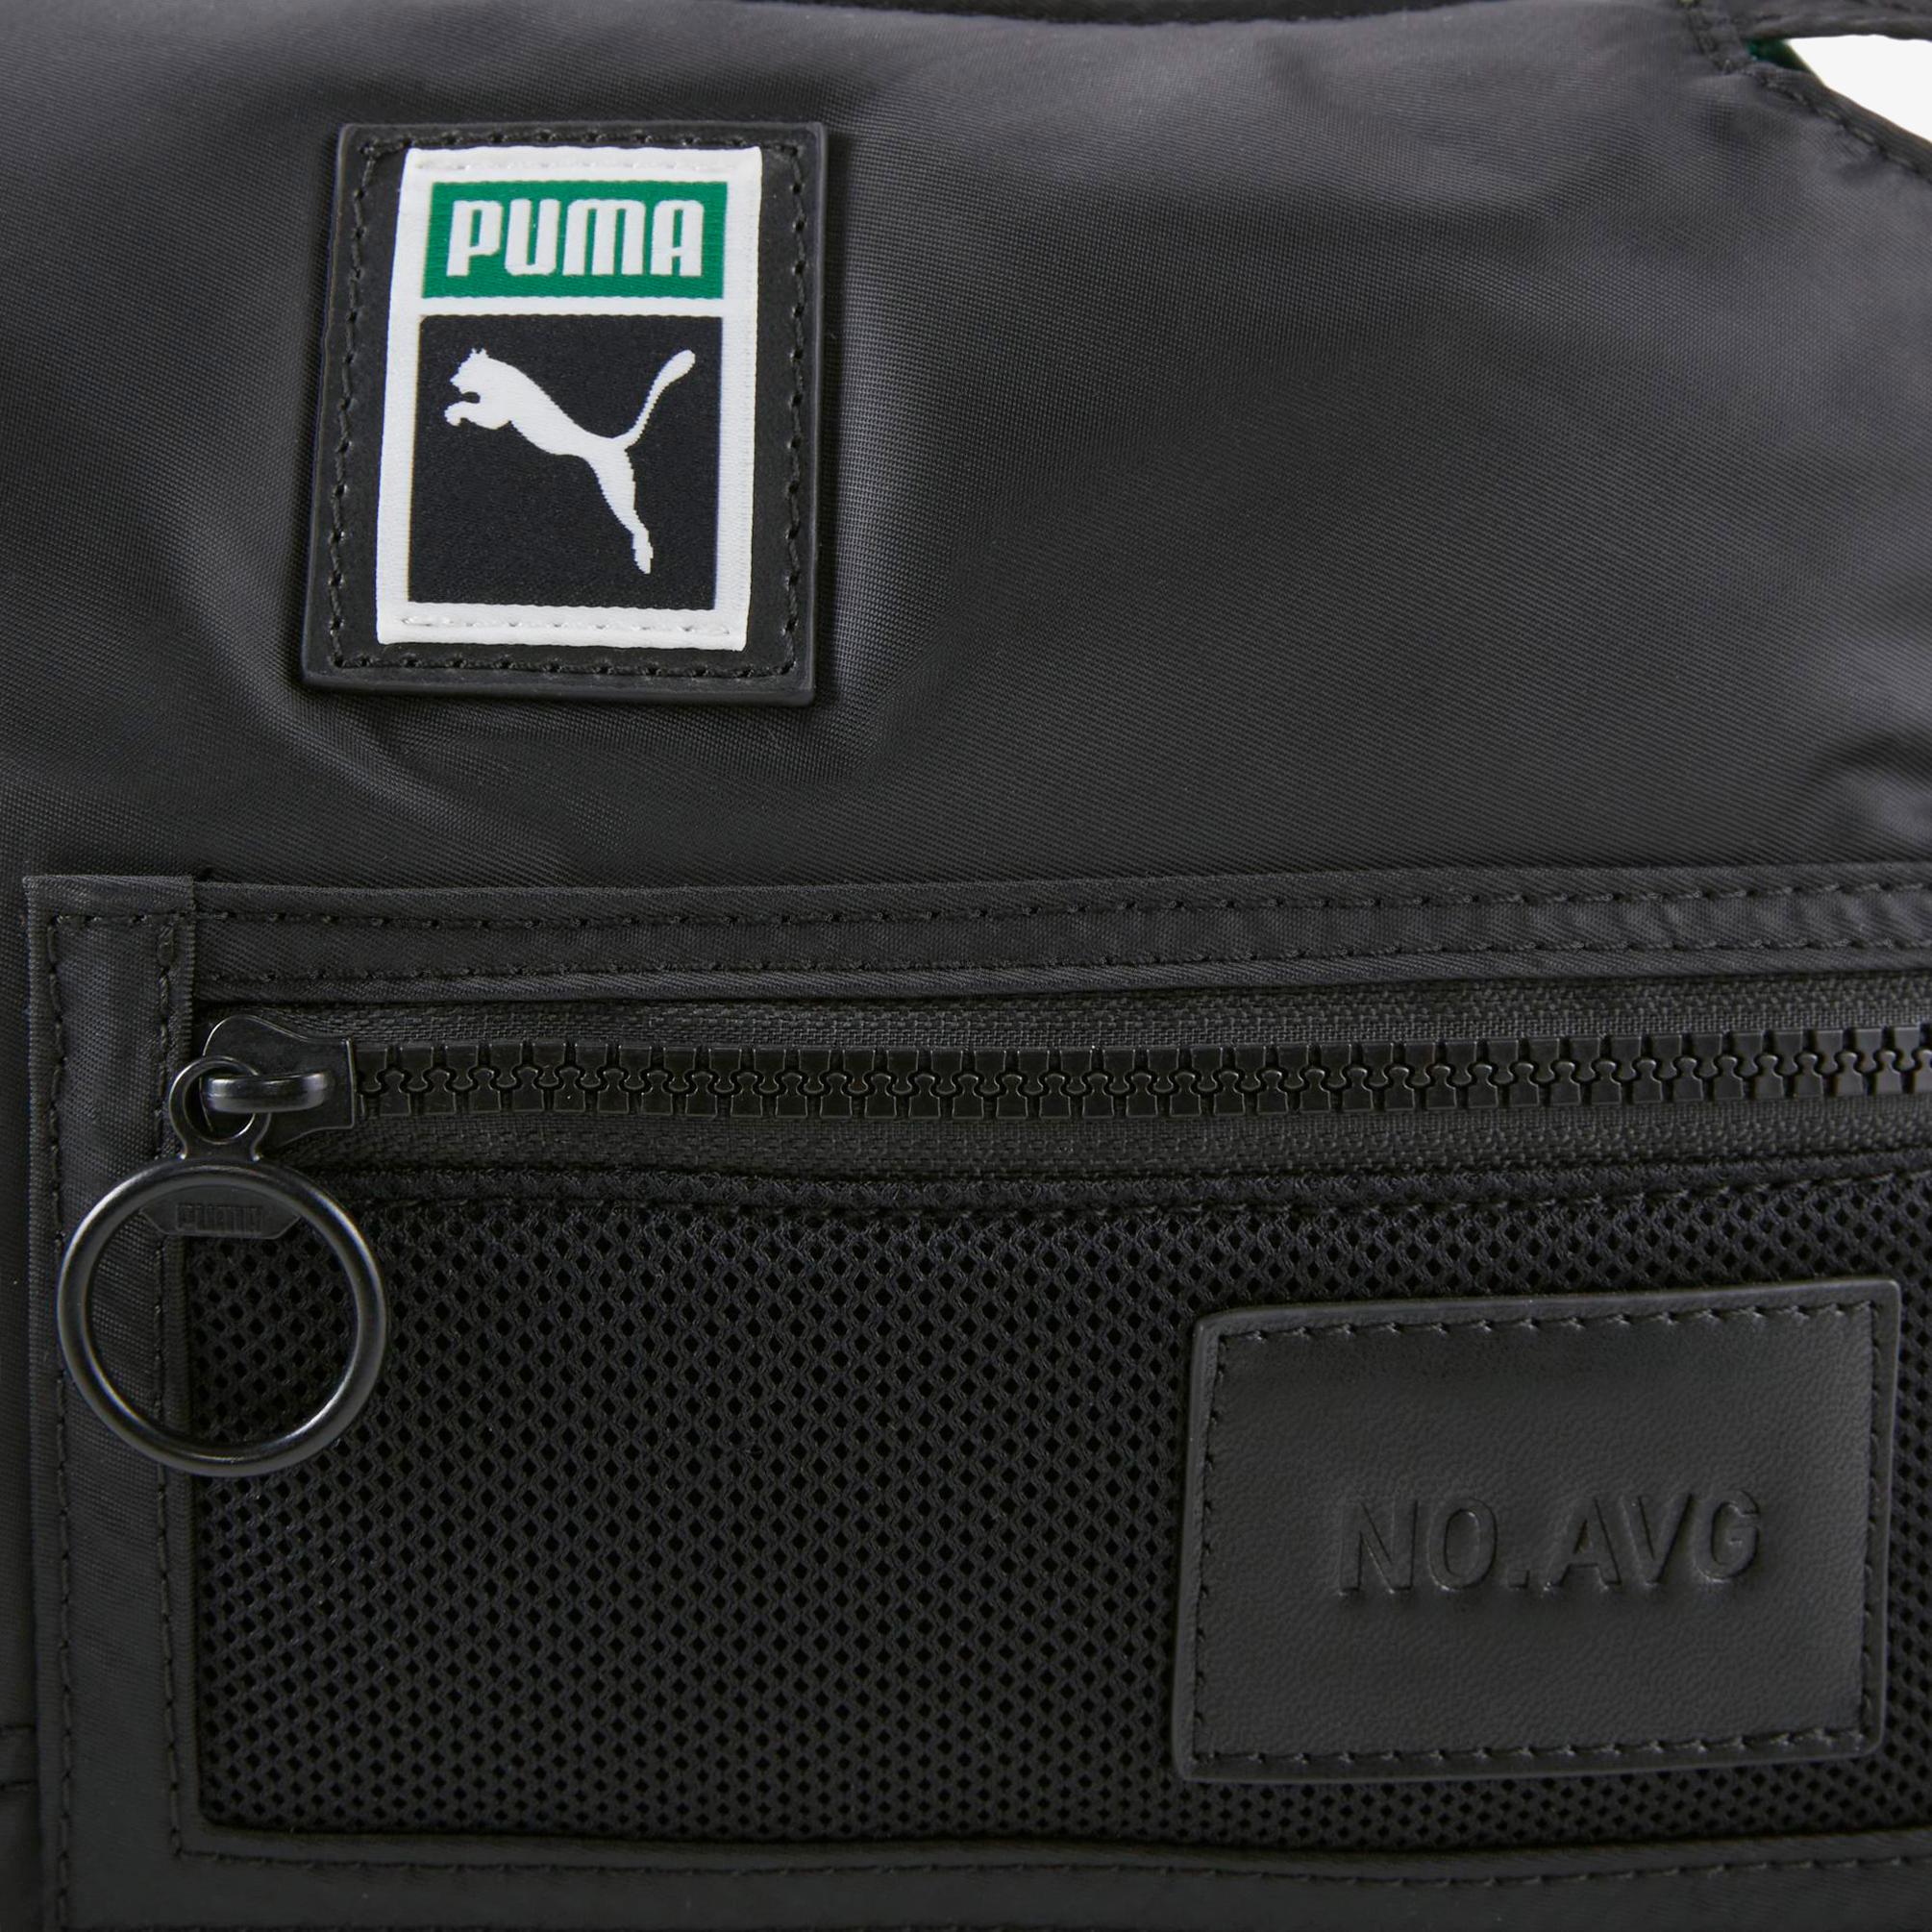  Puma No AVG Medium X-Body Unisex Siyah Omuz Çantası